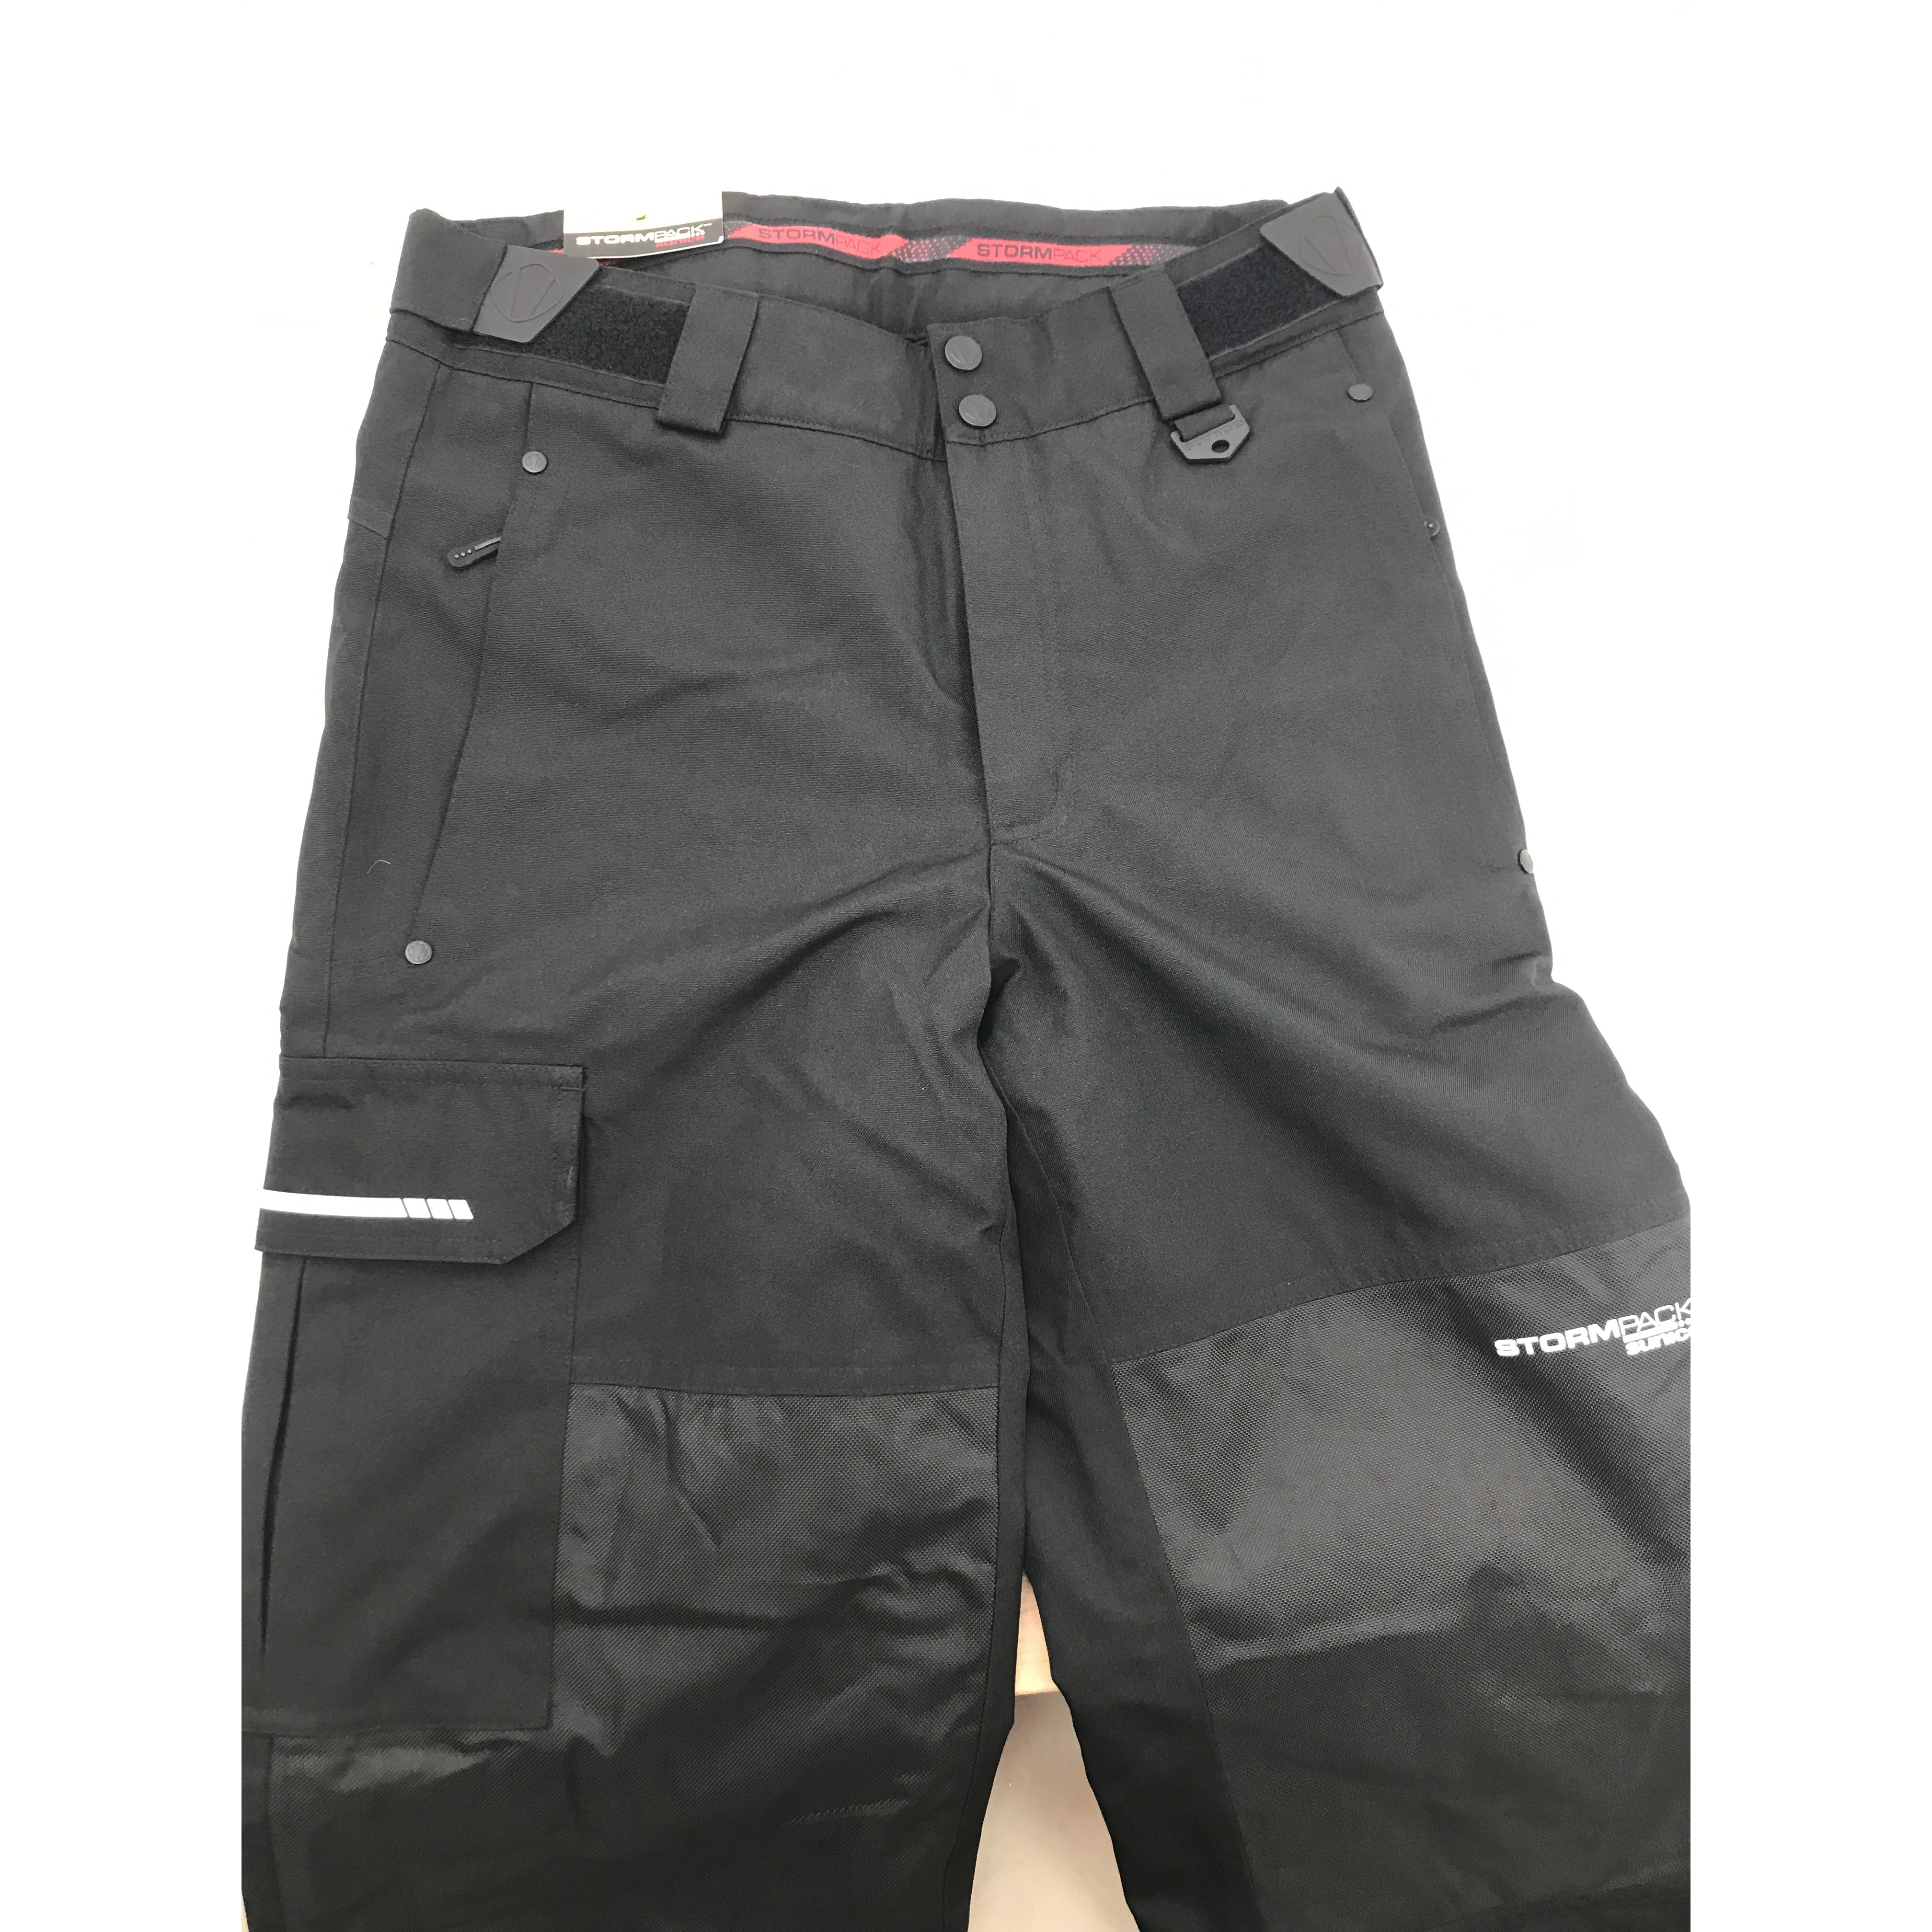 Stormpack Men's Snow Pants / Outdoor Activity Pants / Black / Small